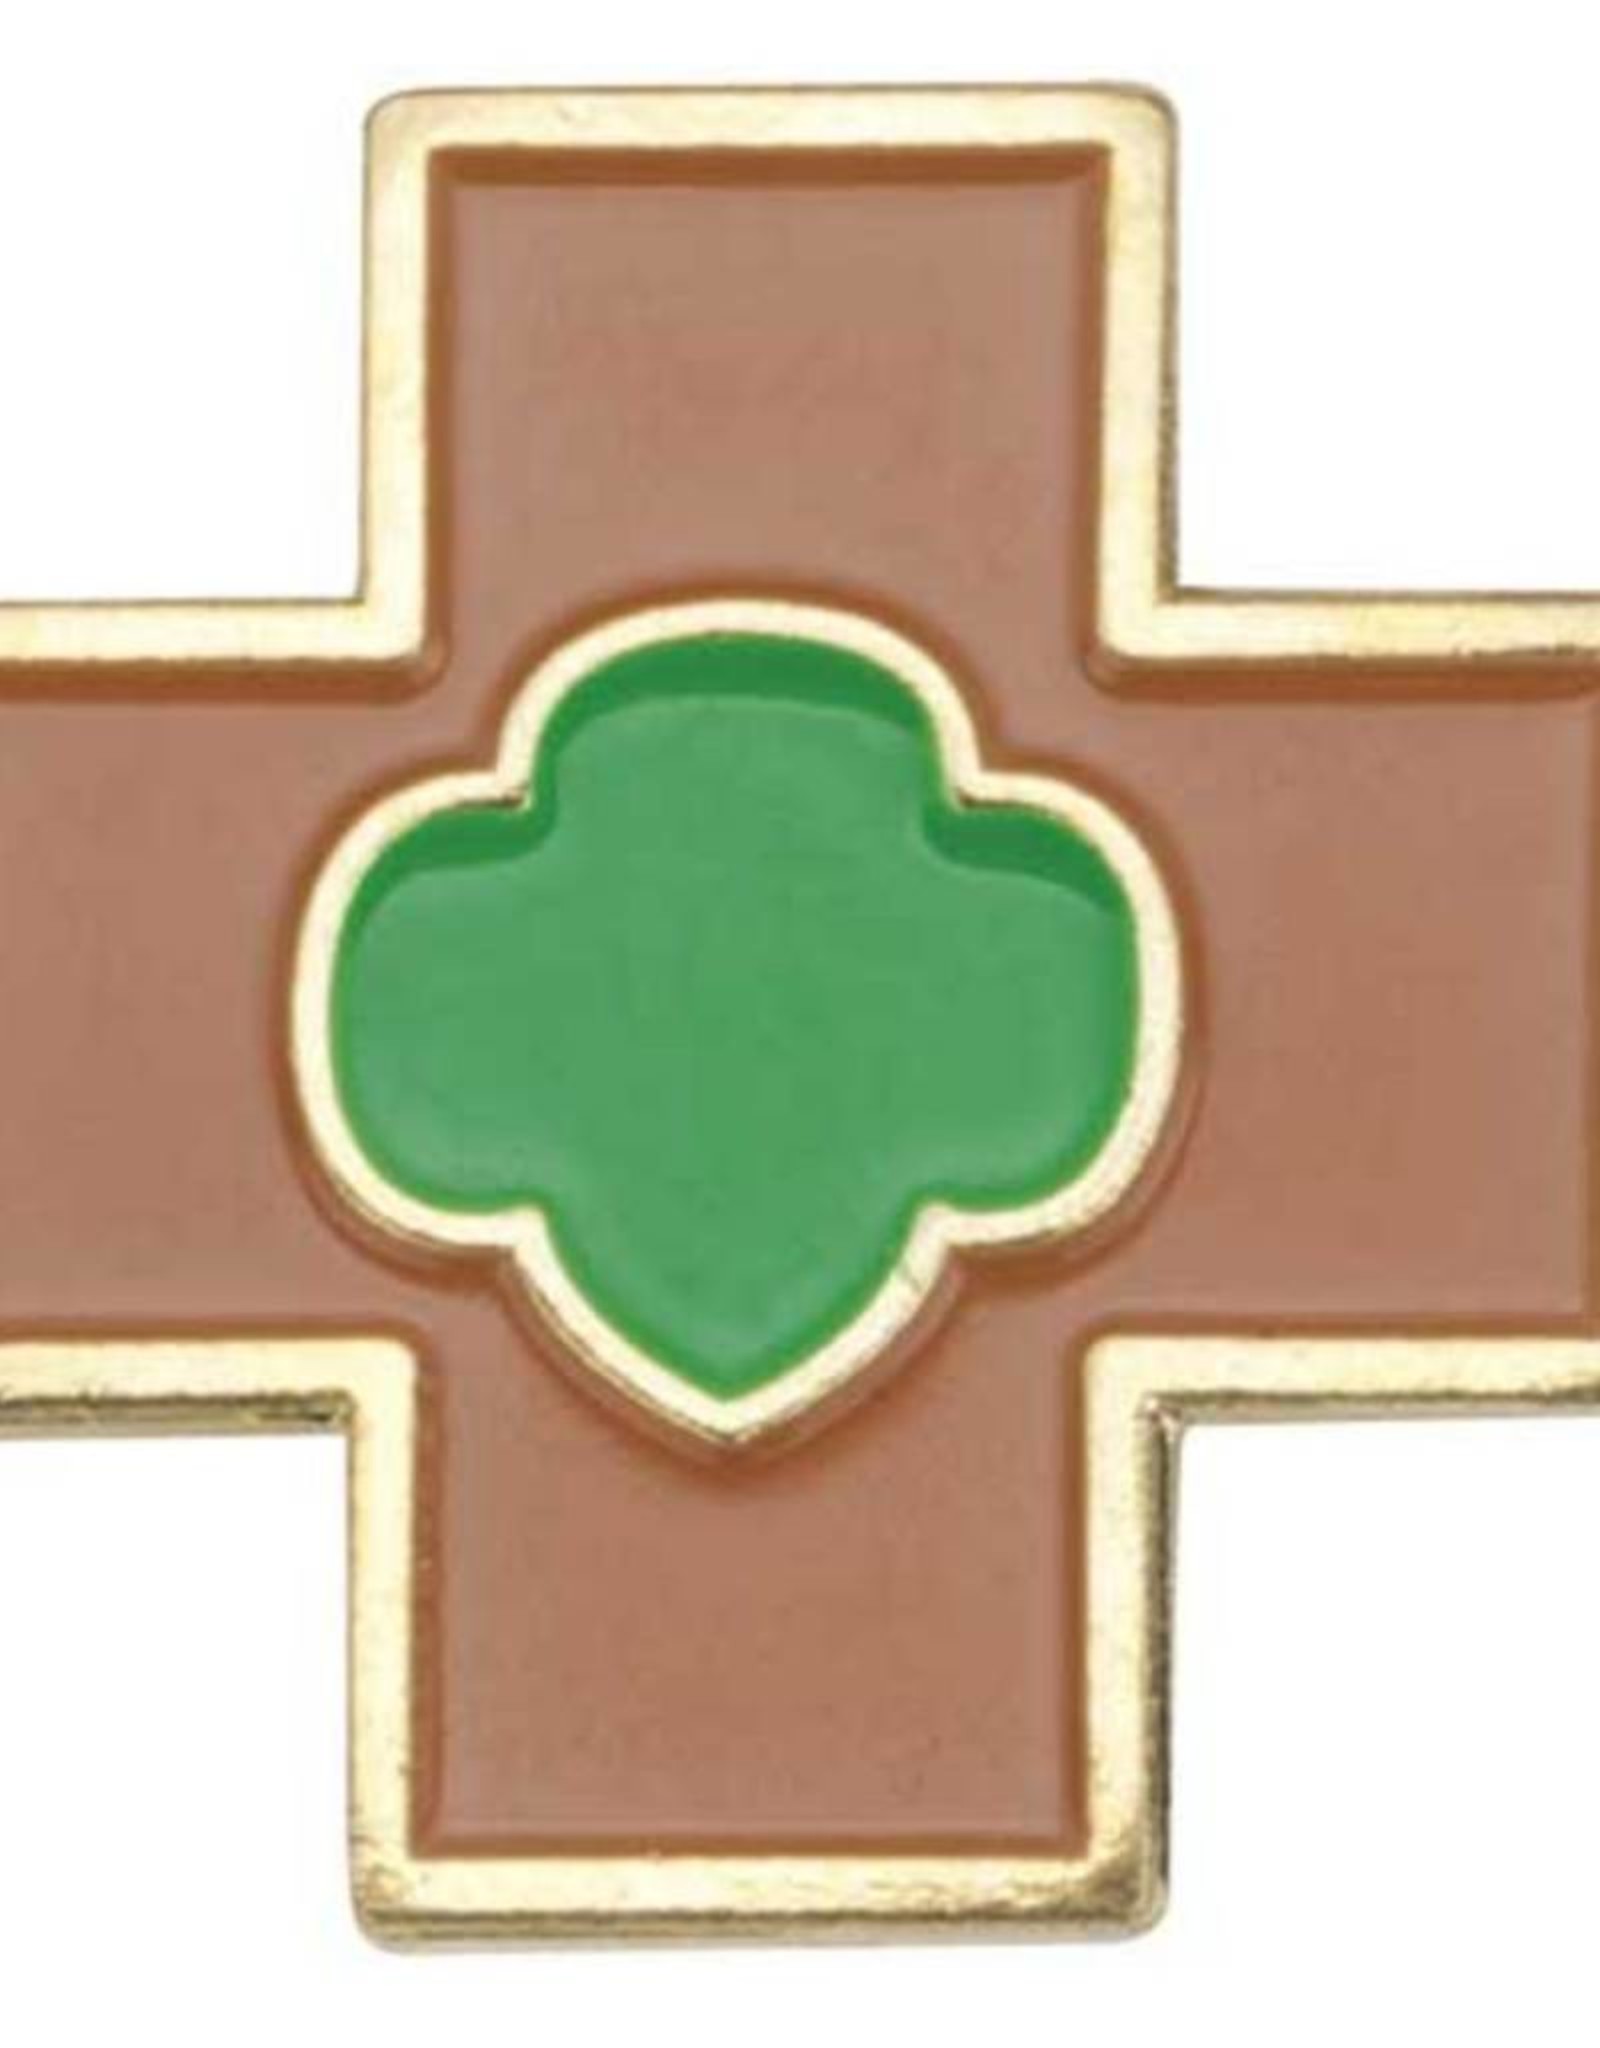 brownies girl scouts logo